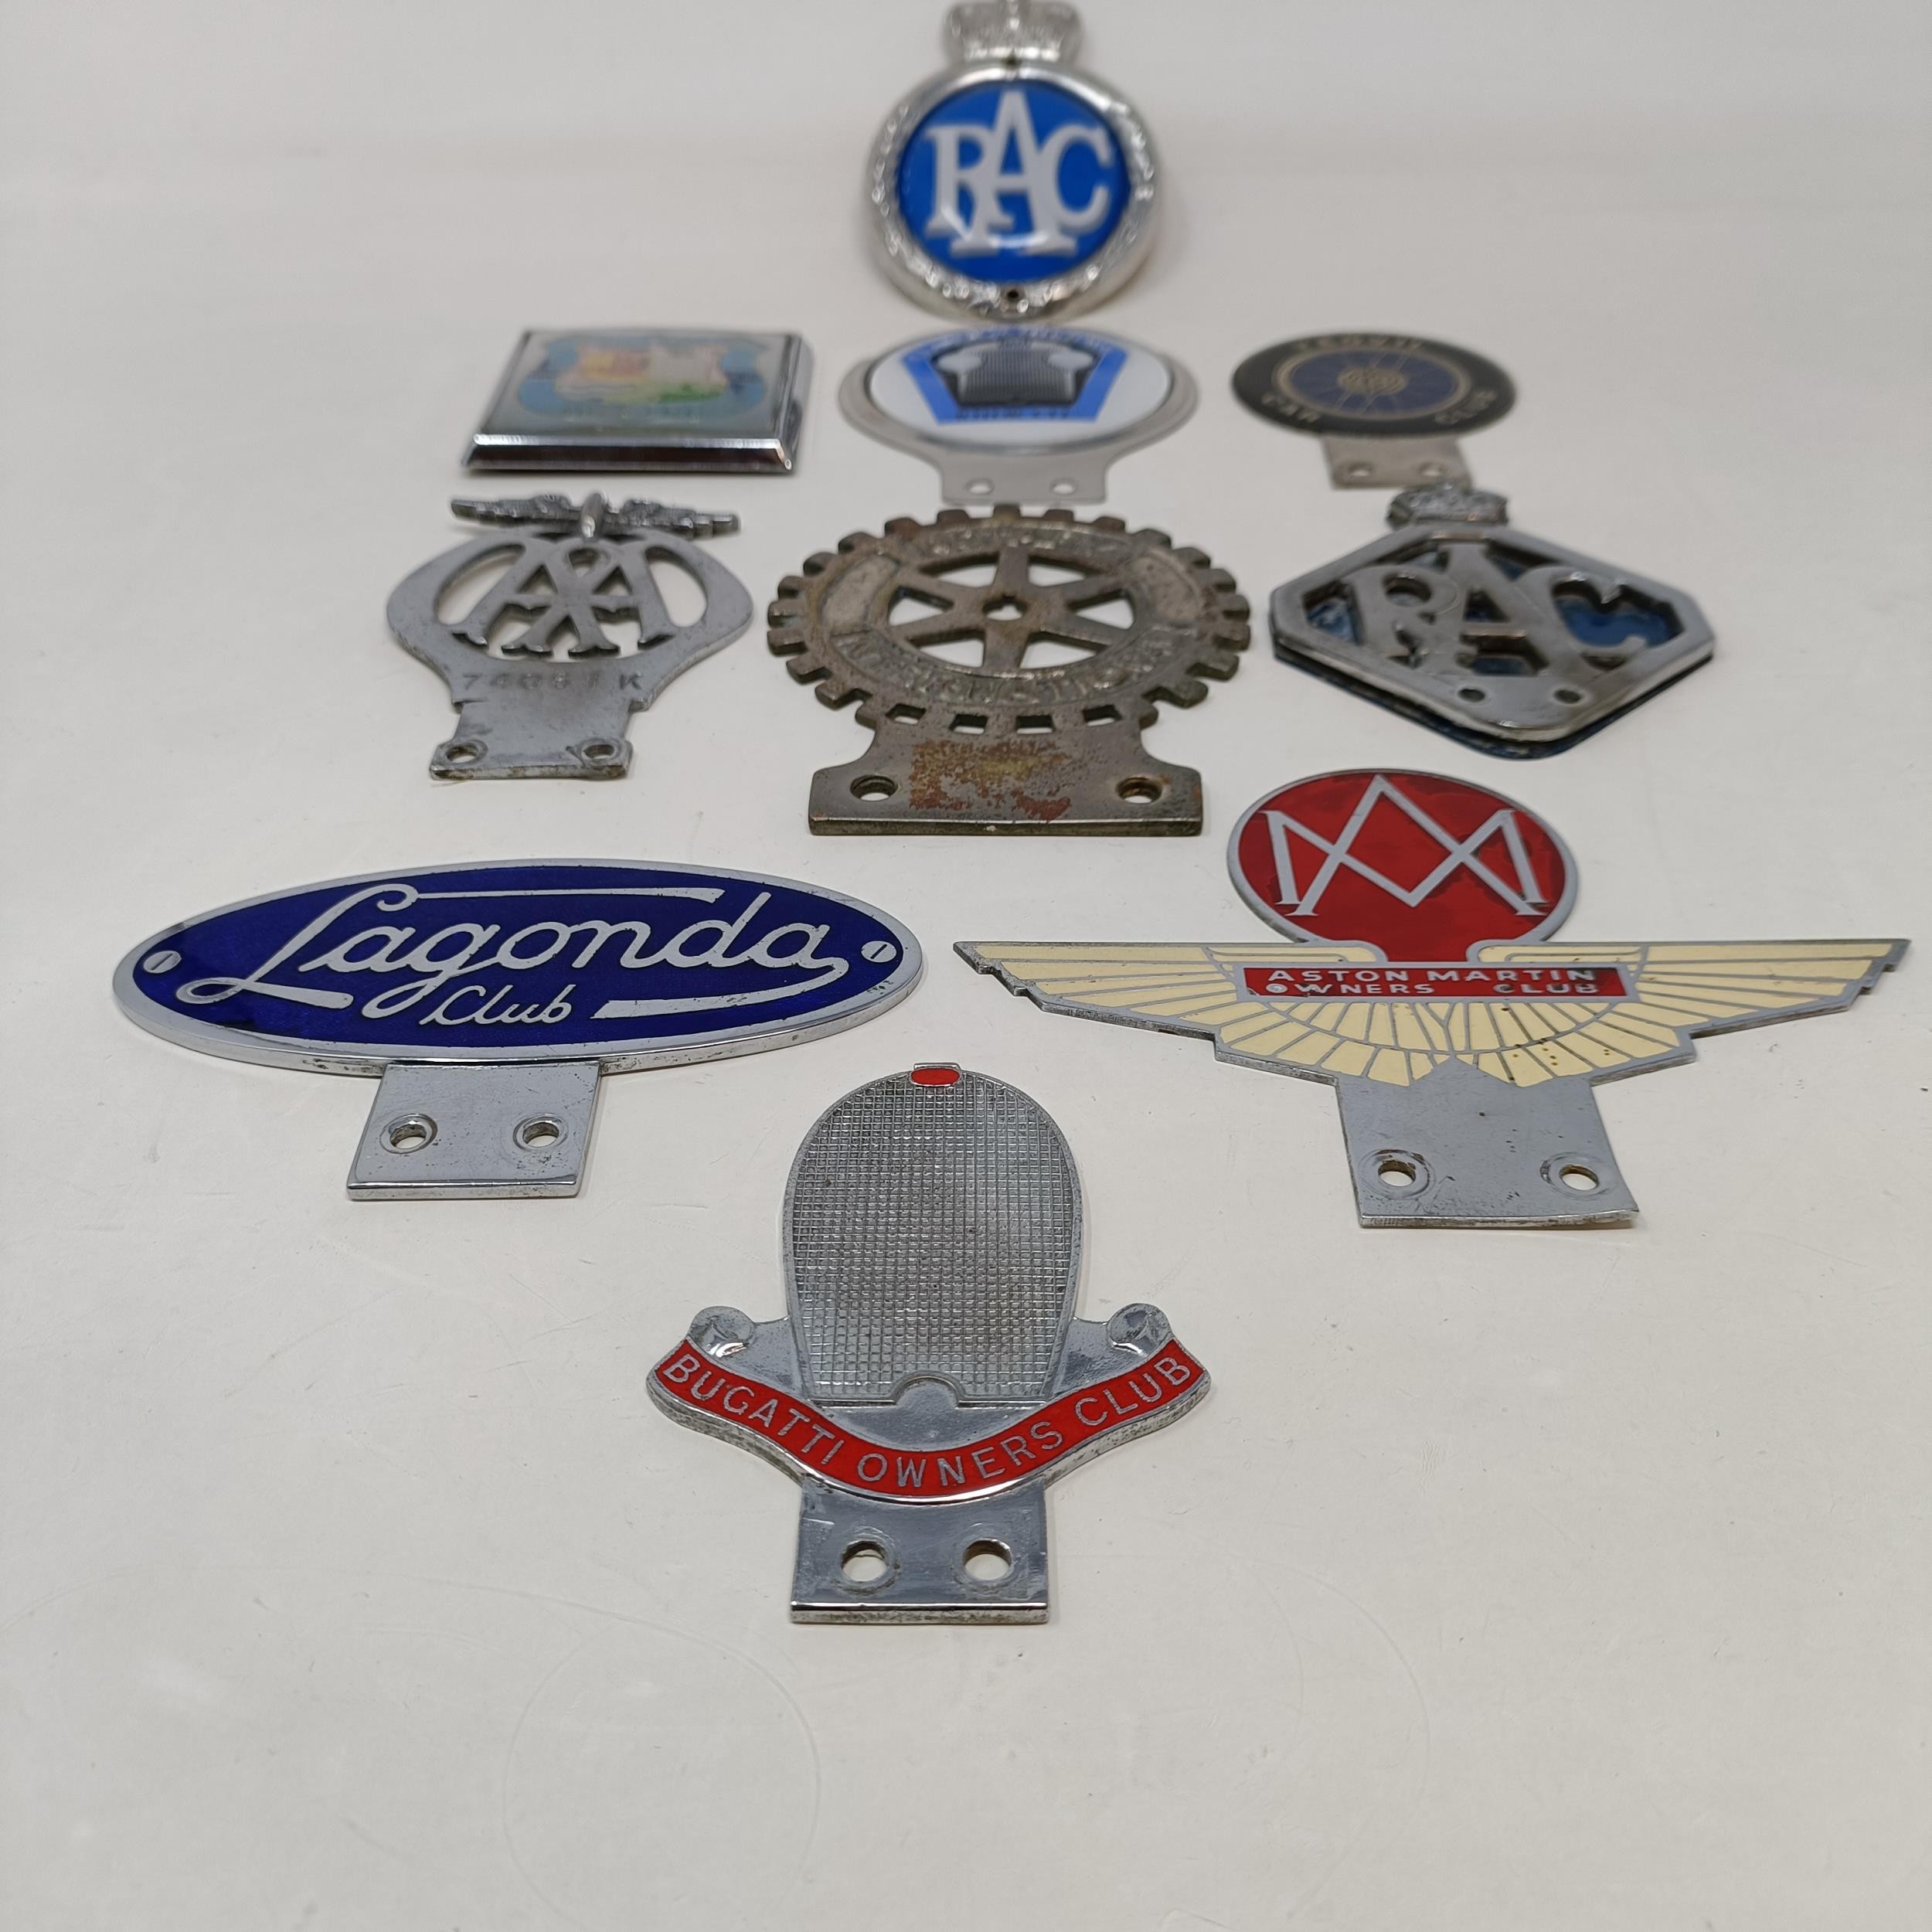 A Lagonda Club car badge, an Aston Martin car badge, and assorted other car badges (box) - Image 2 of 2